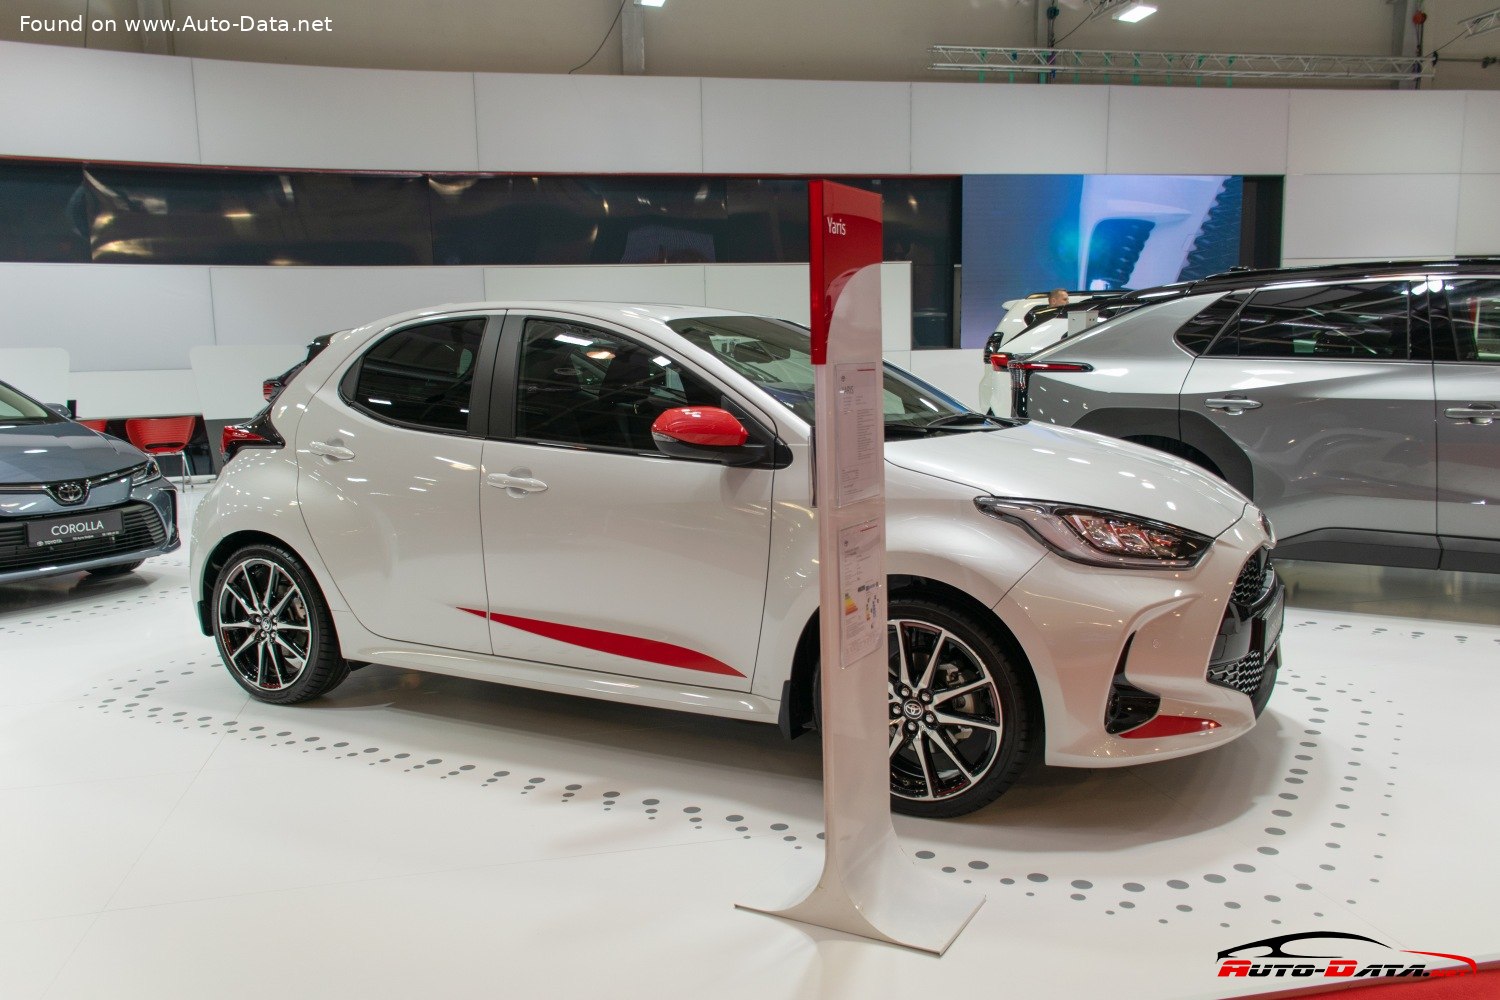 2020 Toyota Yaris (XP210)  Technical Specs, Fuel consumption, Dimensions